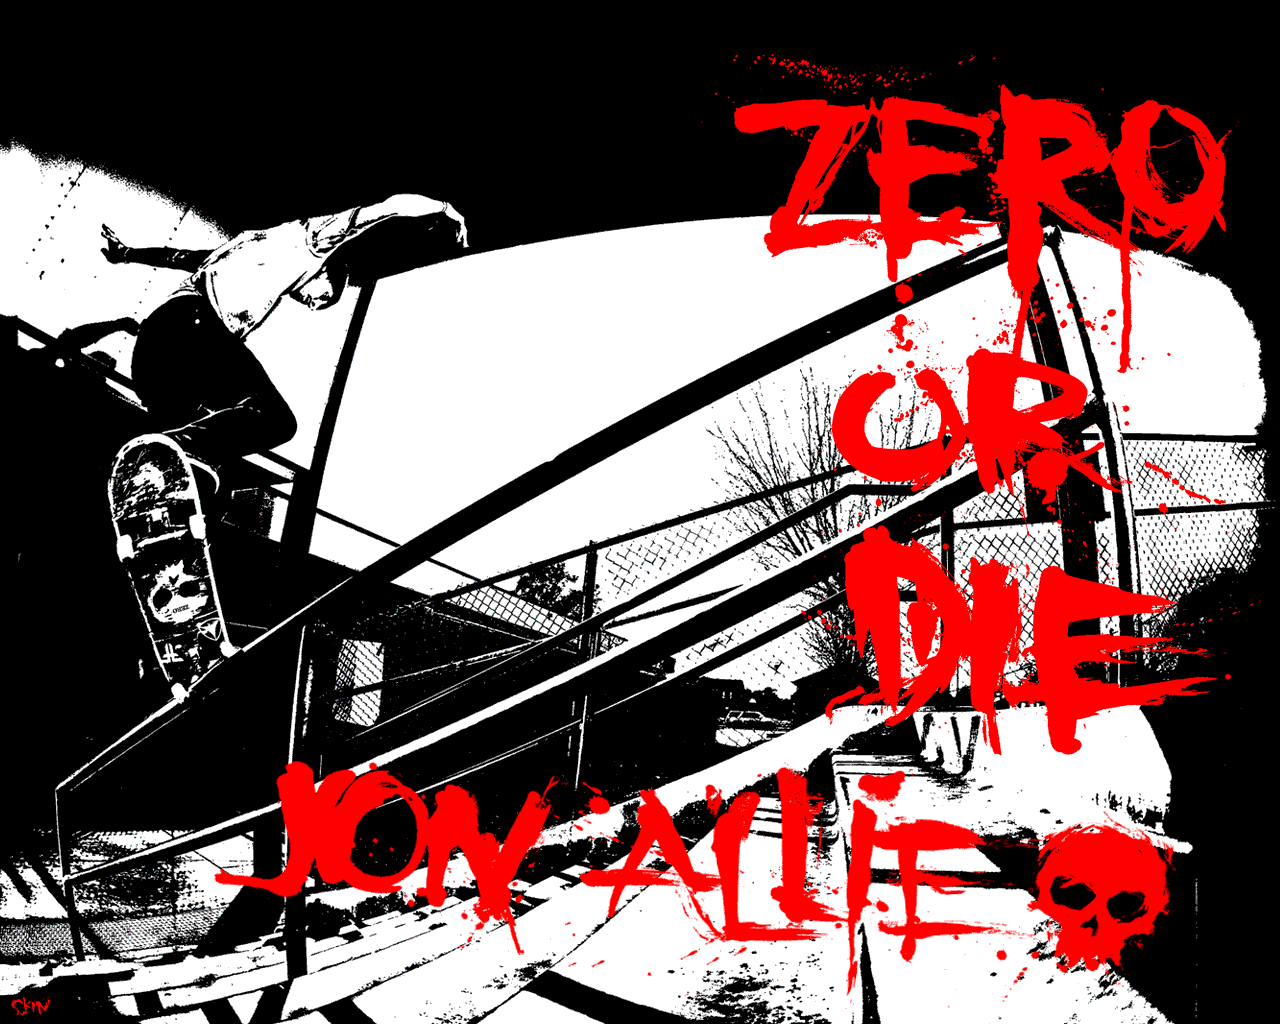 Zero Skateboards Wallpaper